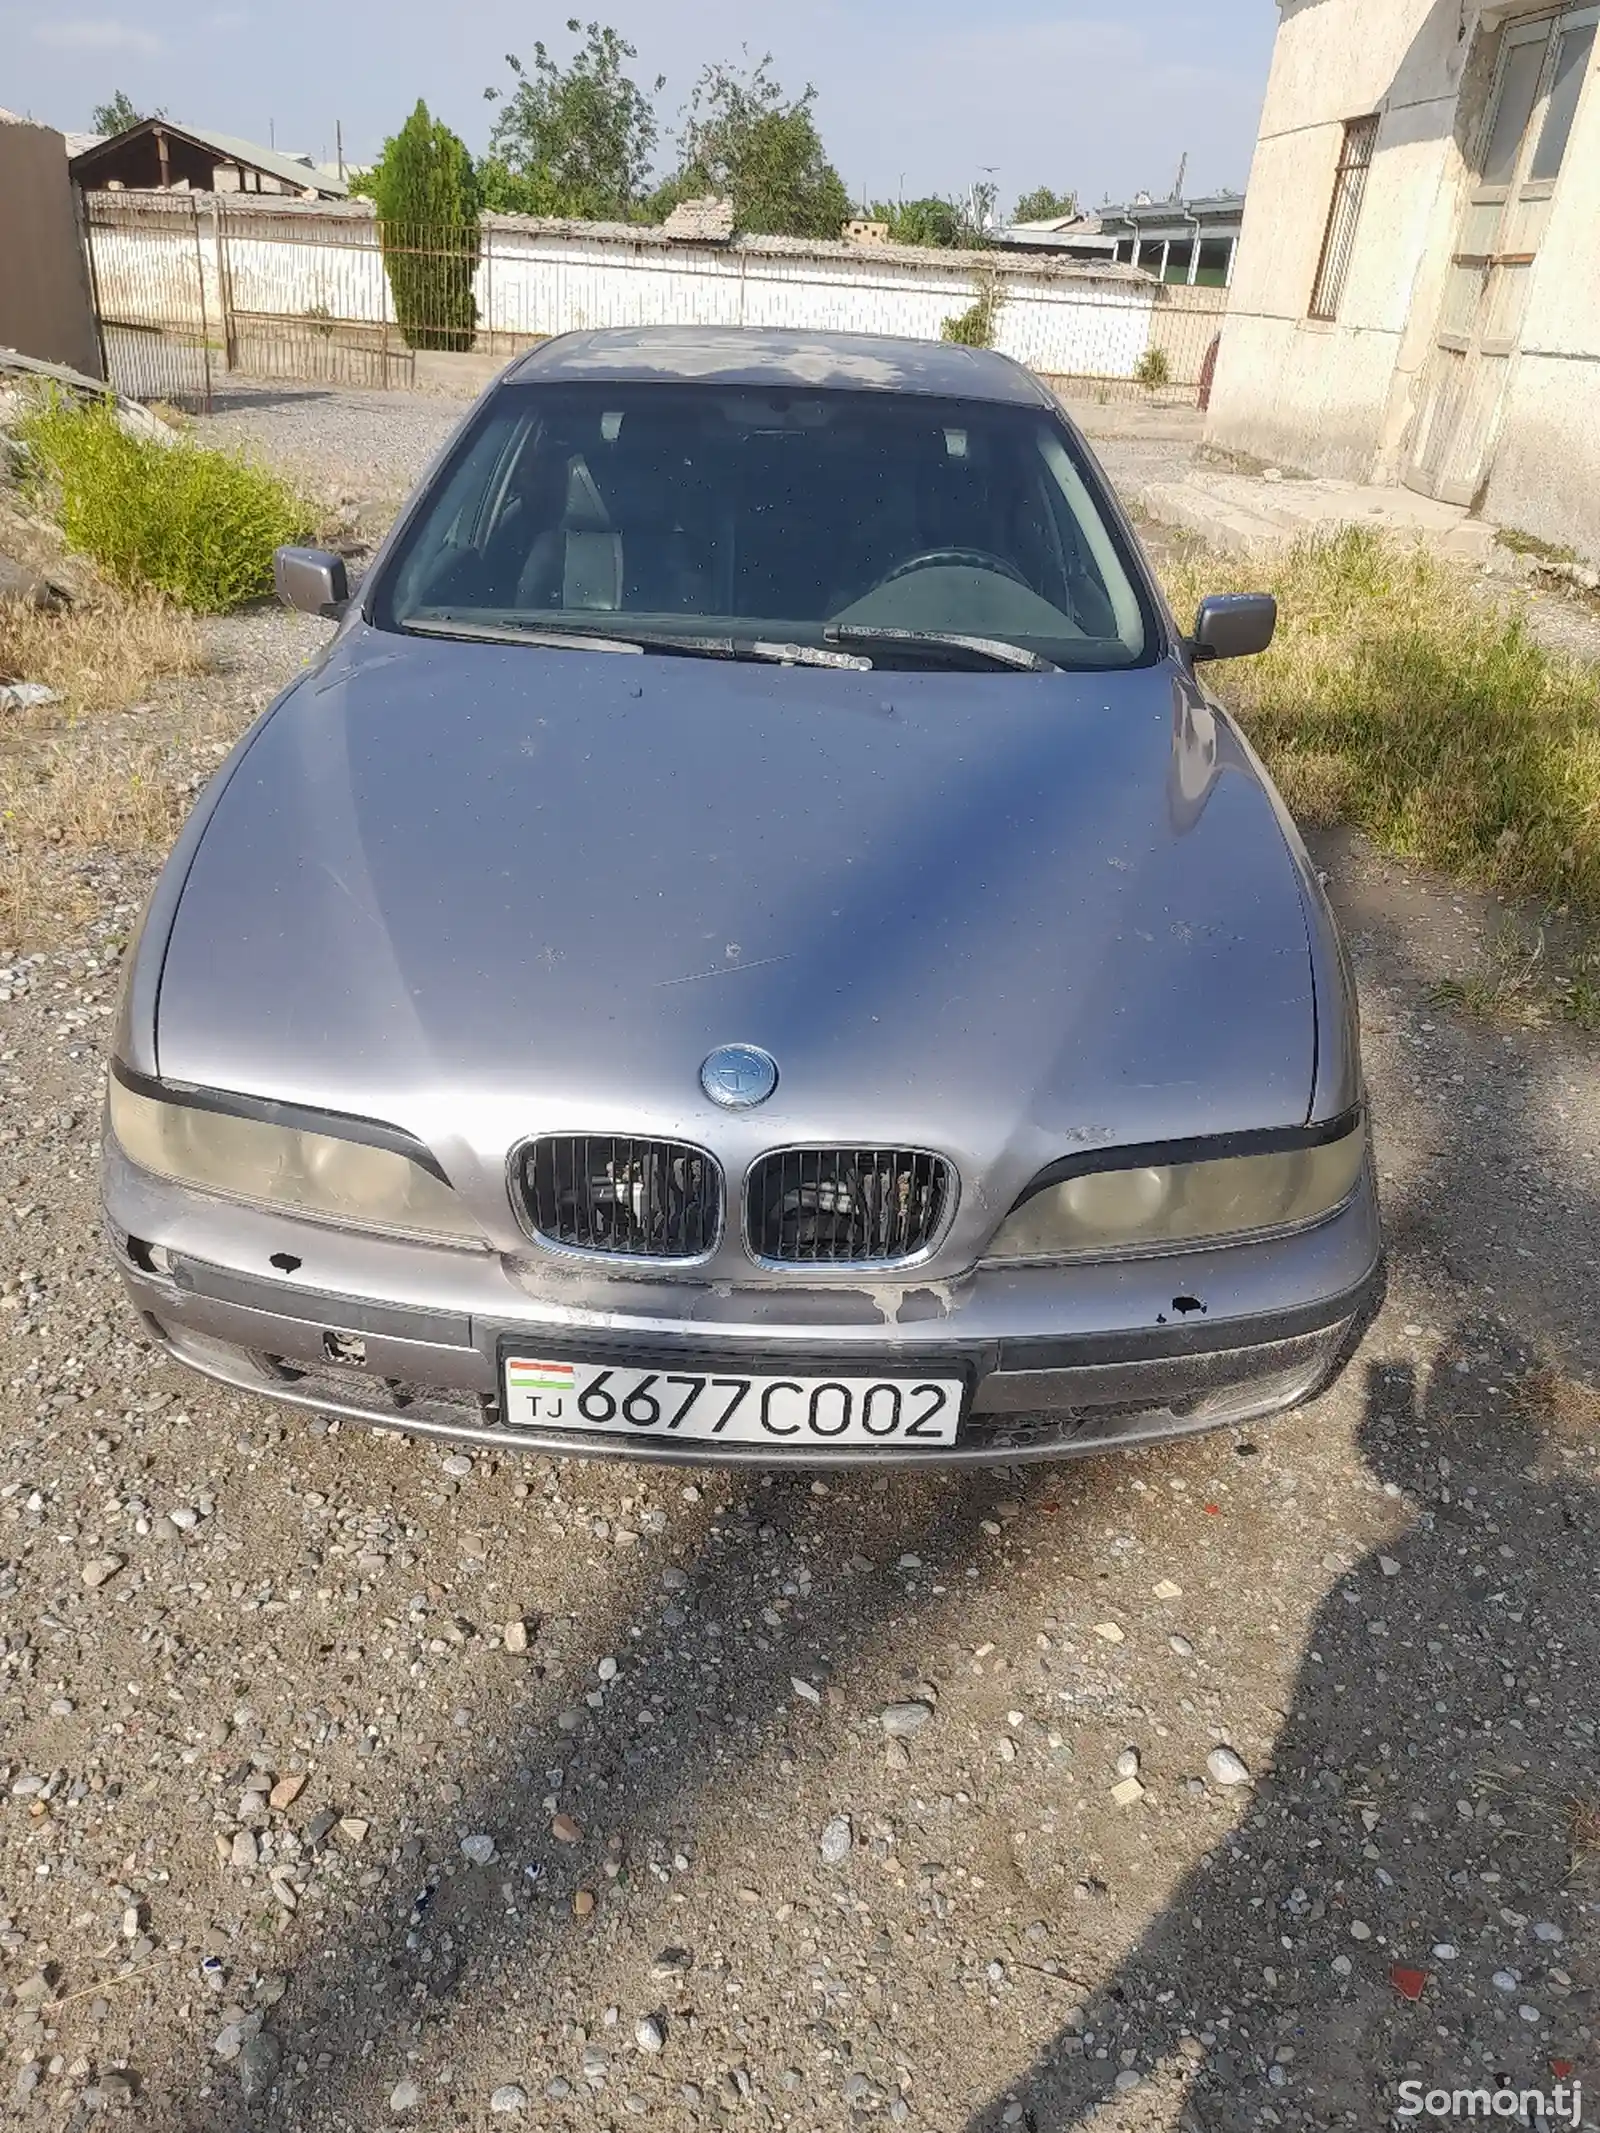 BMW 5 series, 1998-2